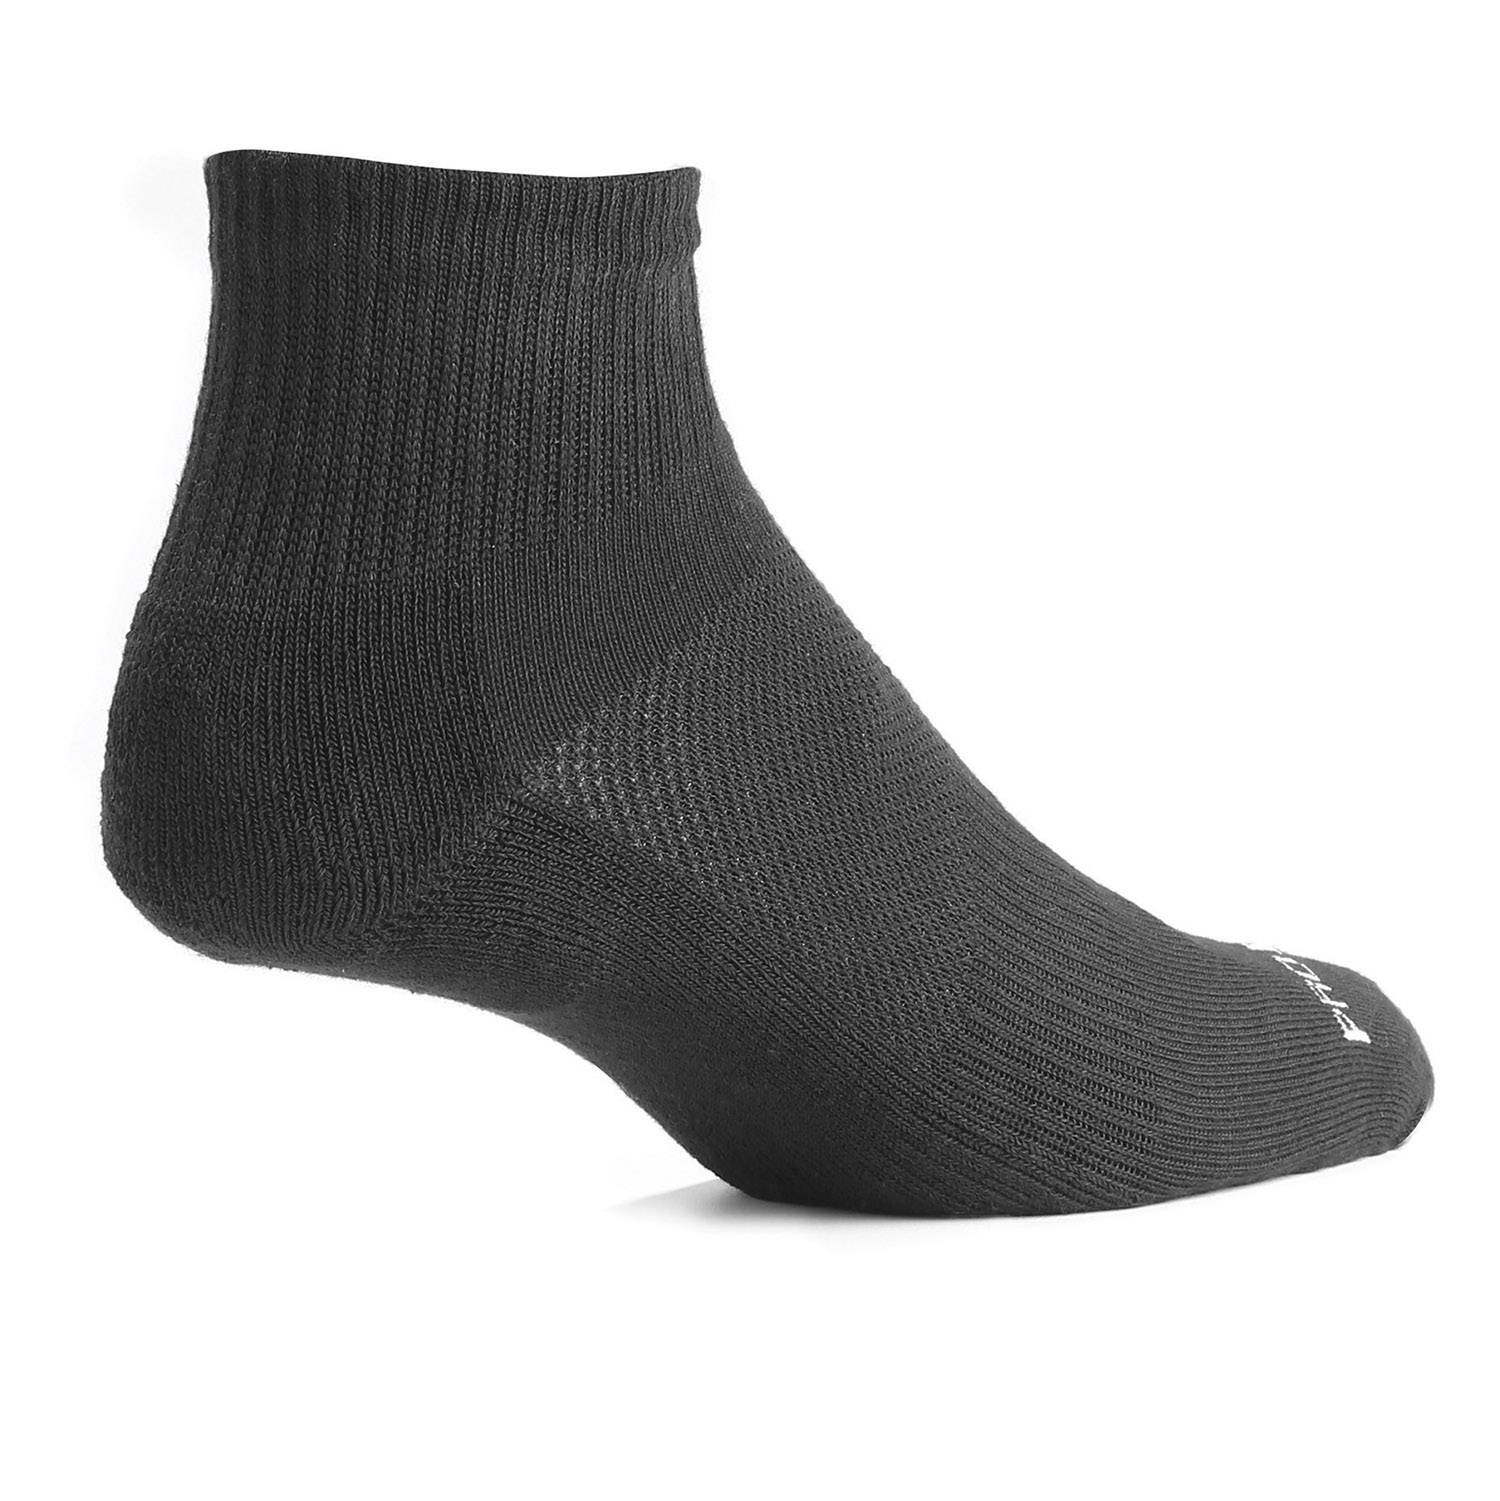 Pro Feet Performance Physical Training Quarter Socks 6 Pack